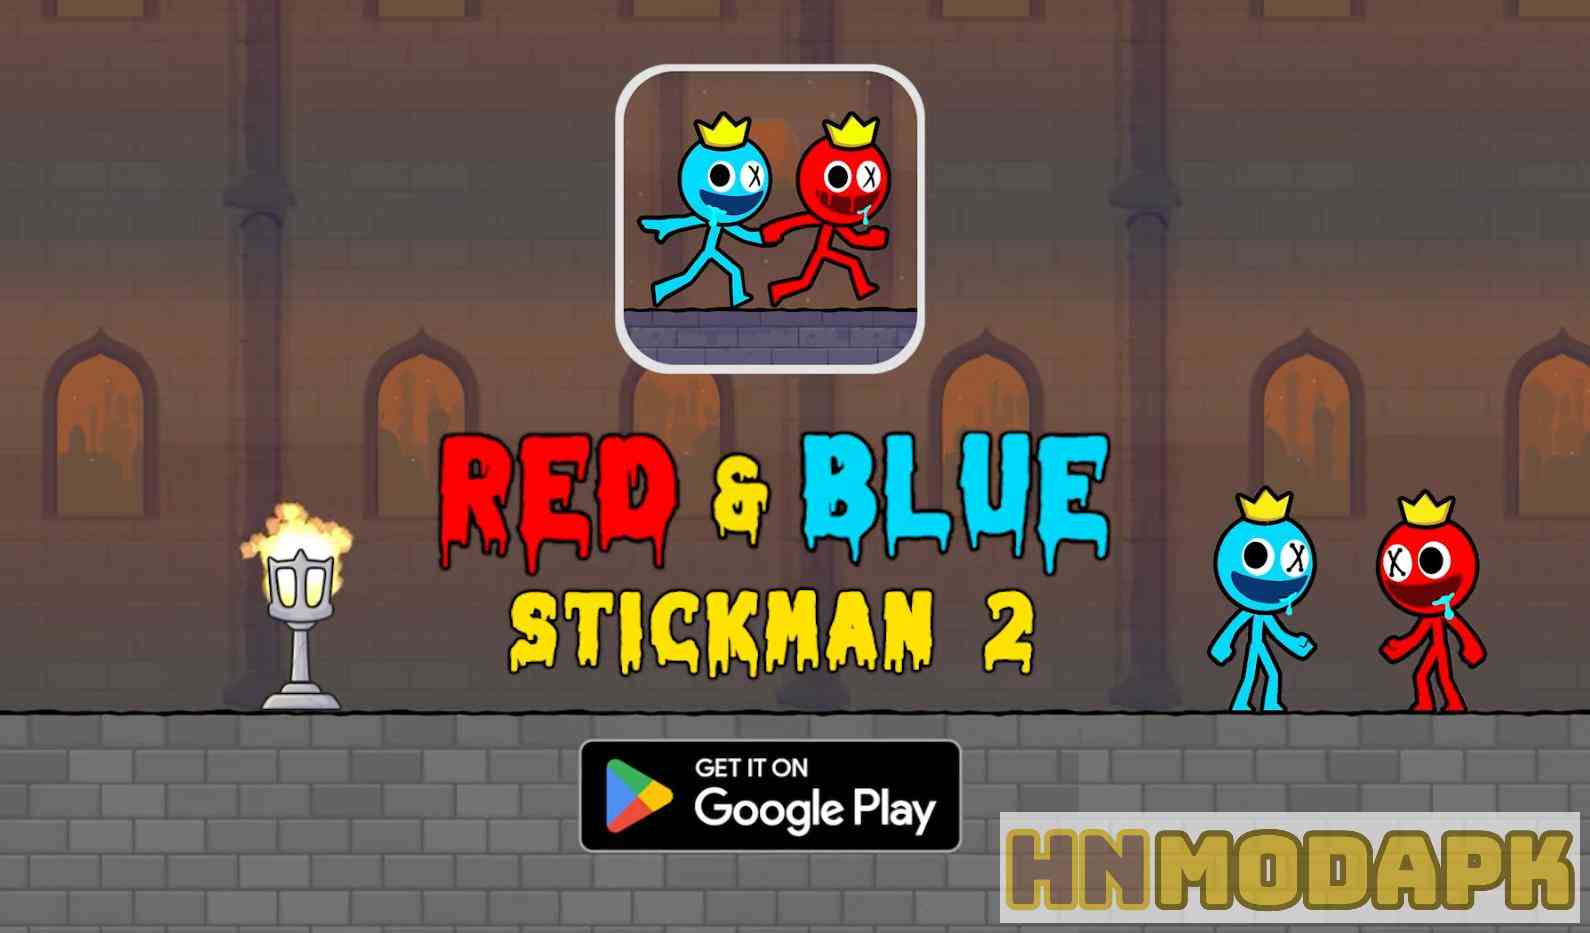 Hack Red and Blue Stickman 2 MOD (Menu Pro, Tiền Full, Cấp Độ, Tất Cả Skins) APK 2.2.2